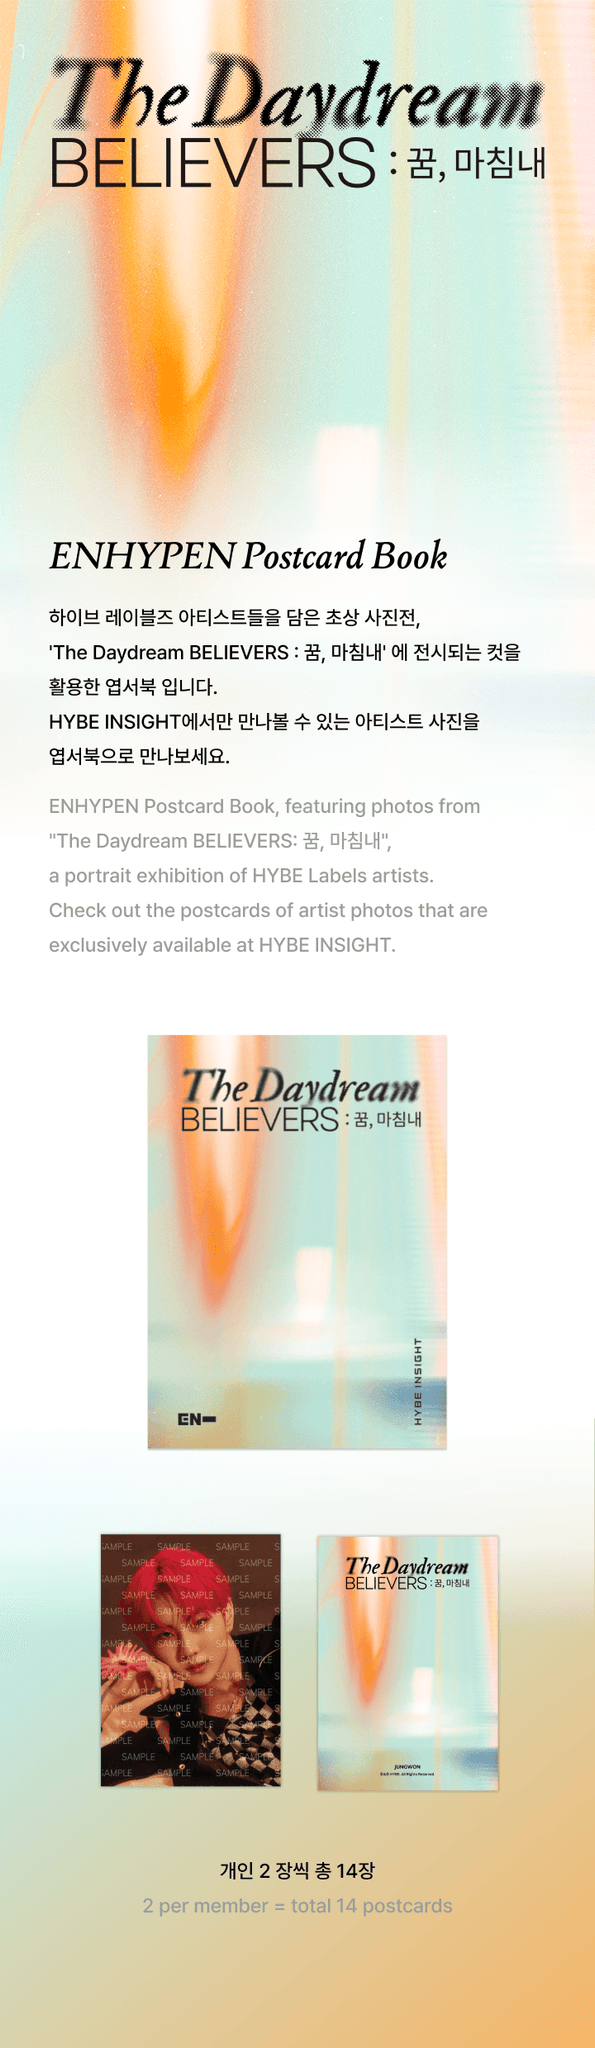 ENHYPEN The Daydream Believers Postcard Book